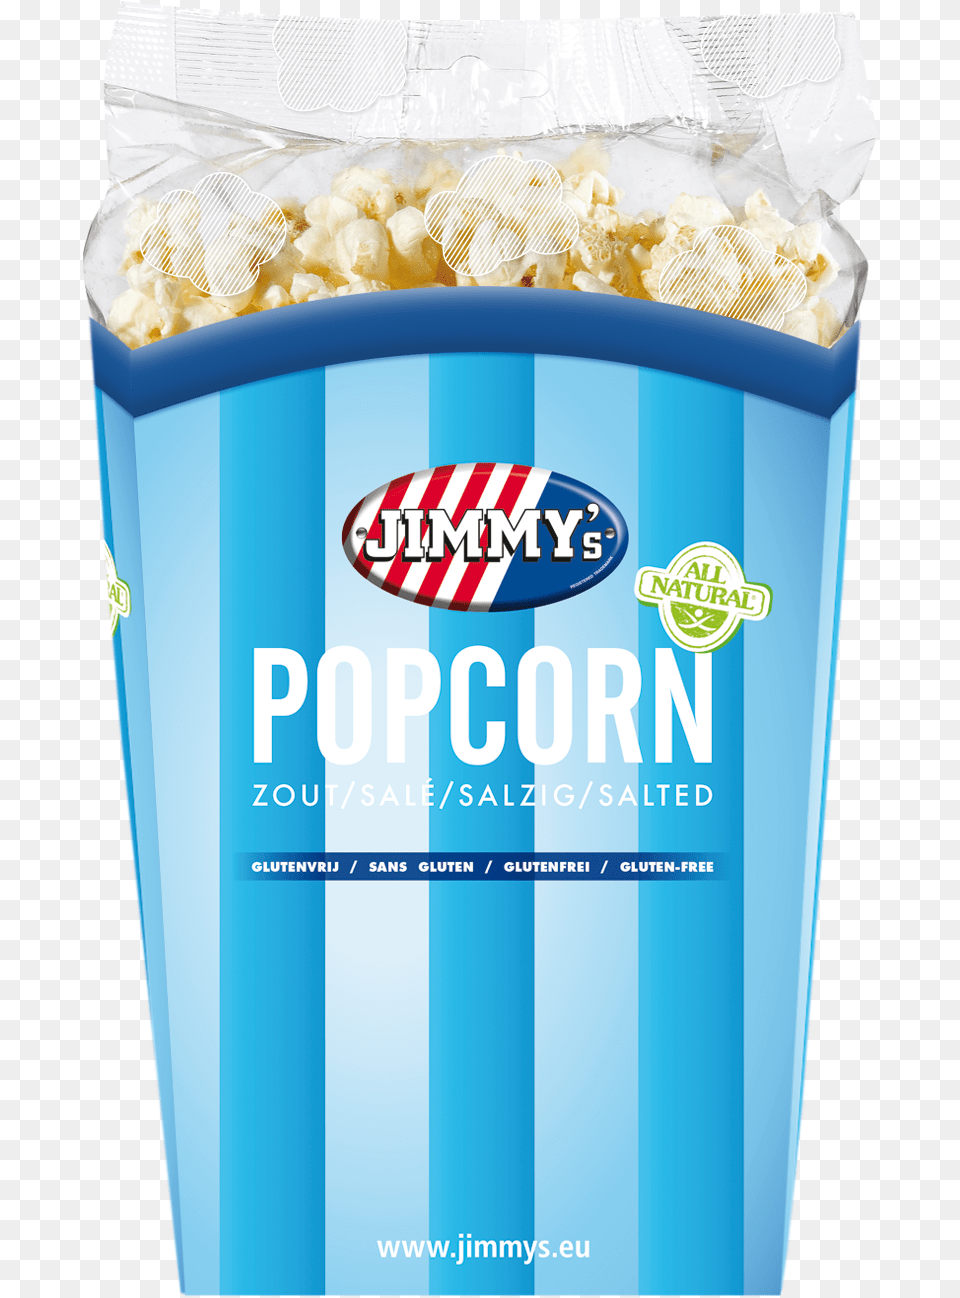 Popcorn, Food, Snack Free Transparent Png